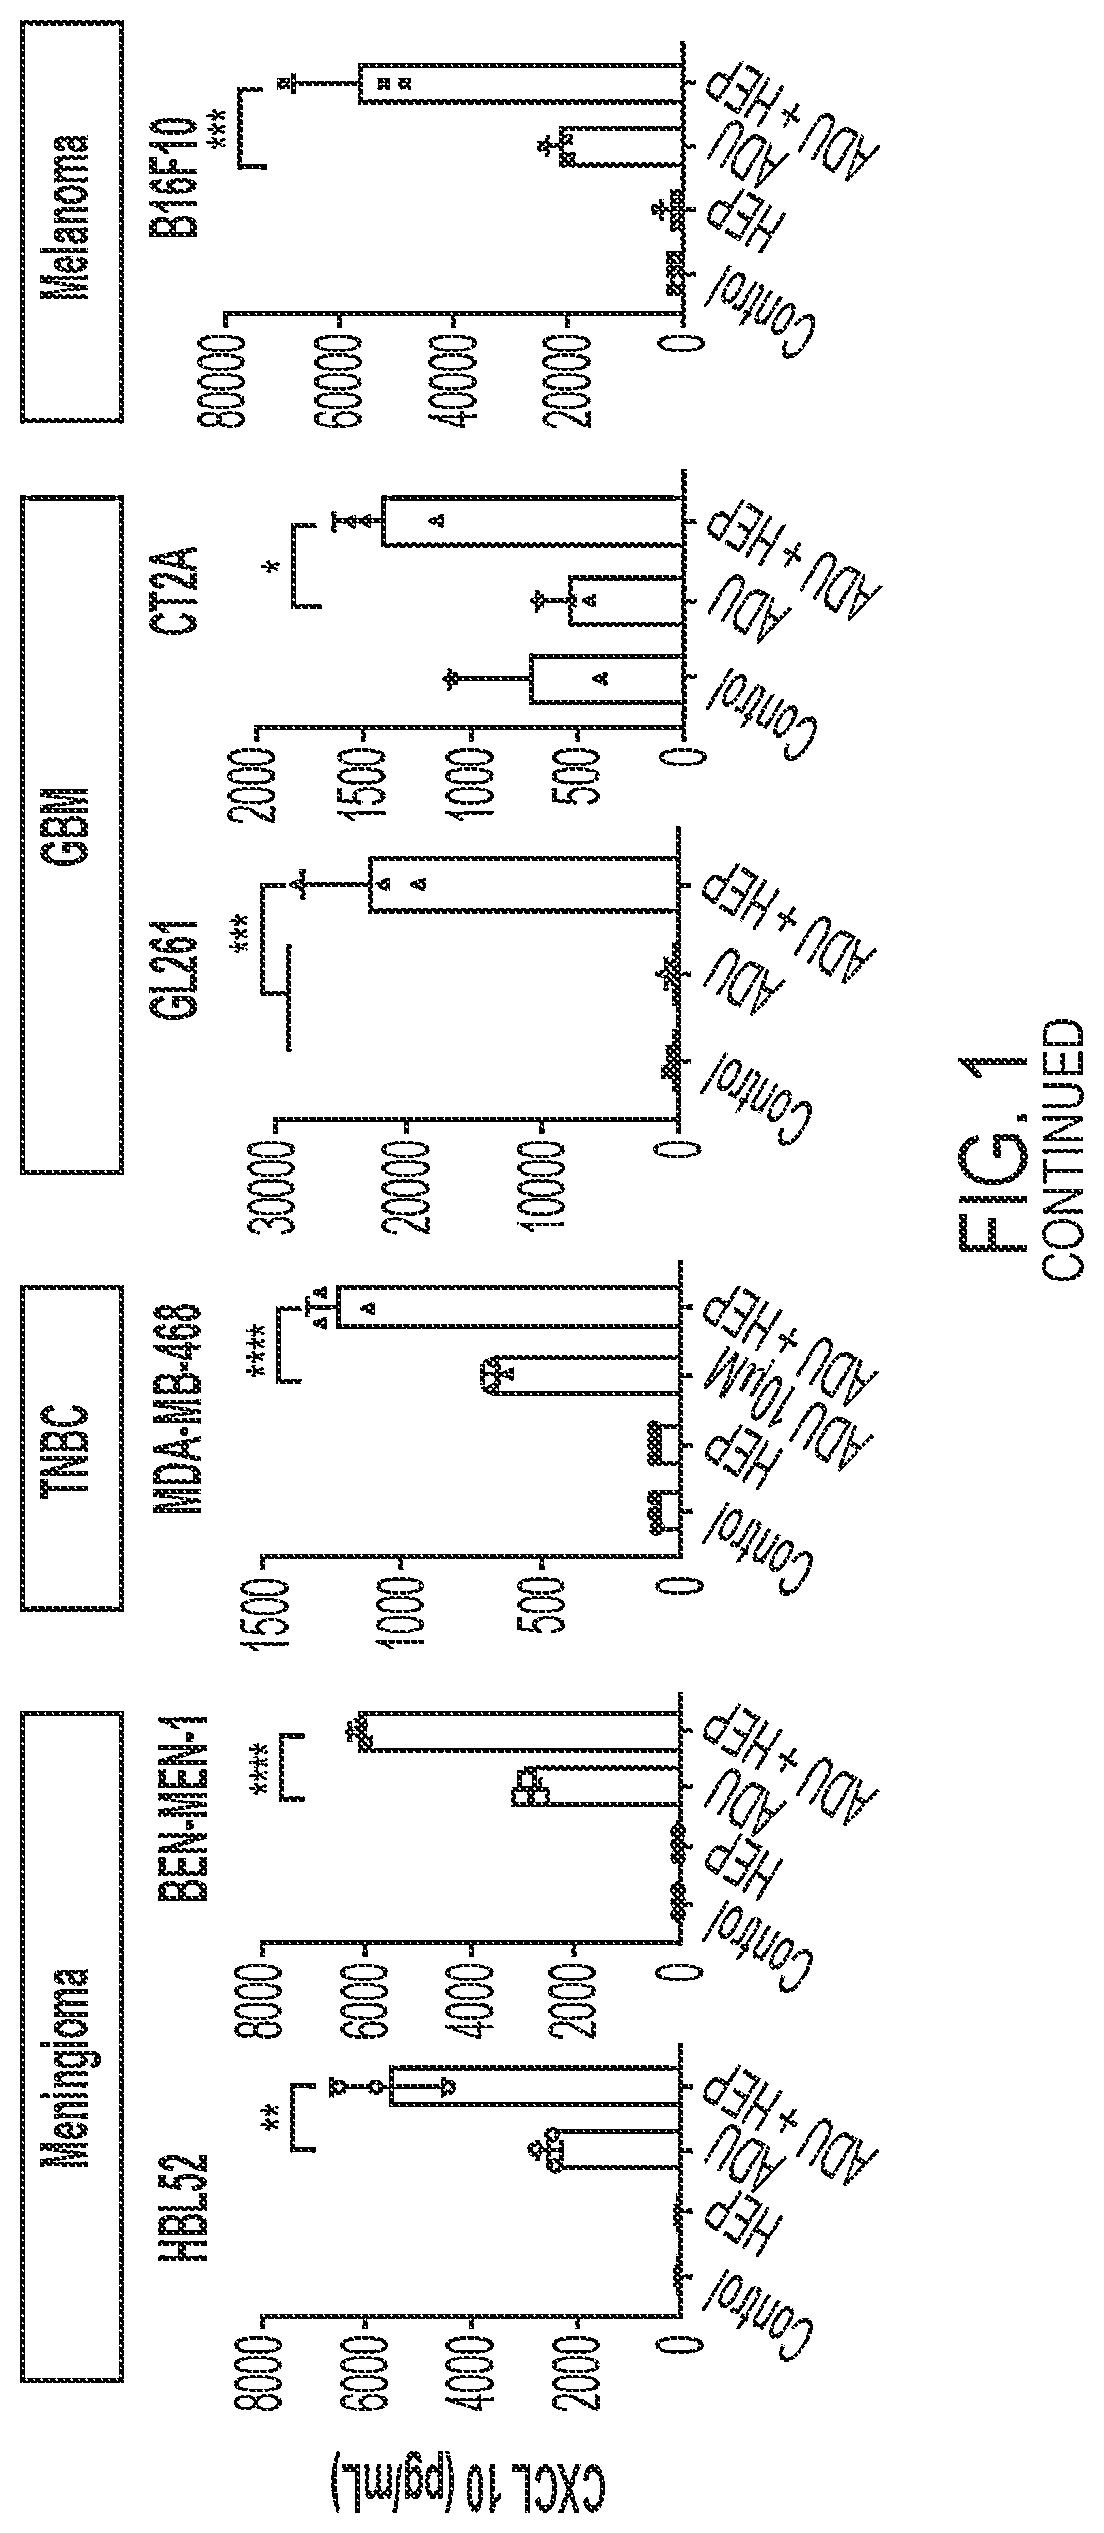 Use of heparin to promote type 1 interferon signaling